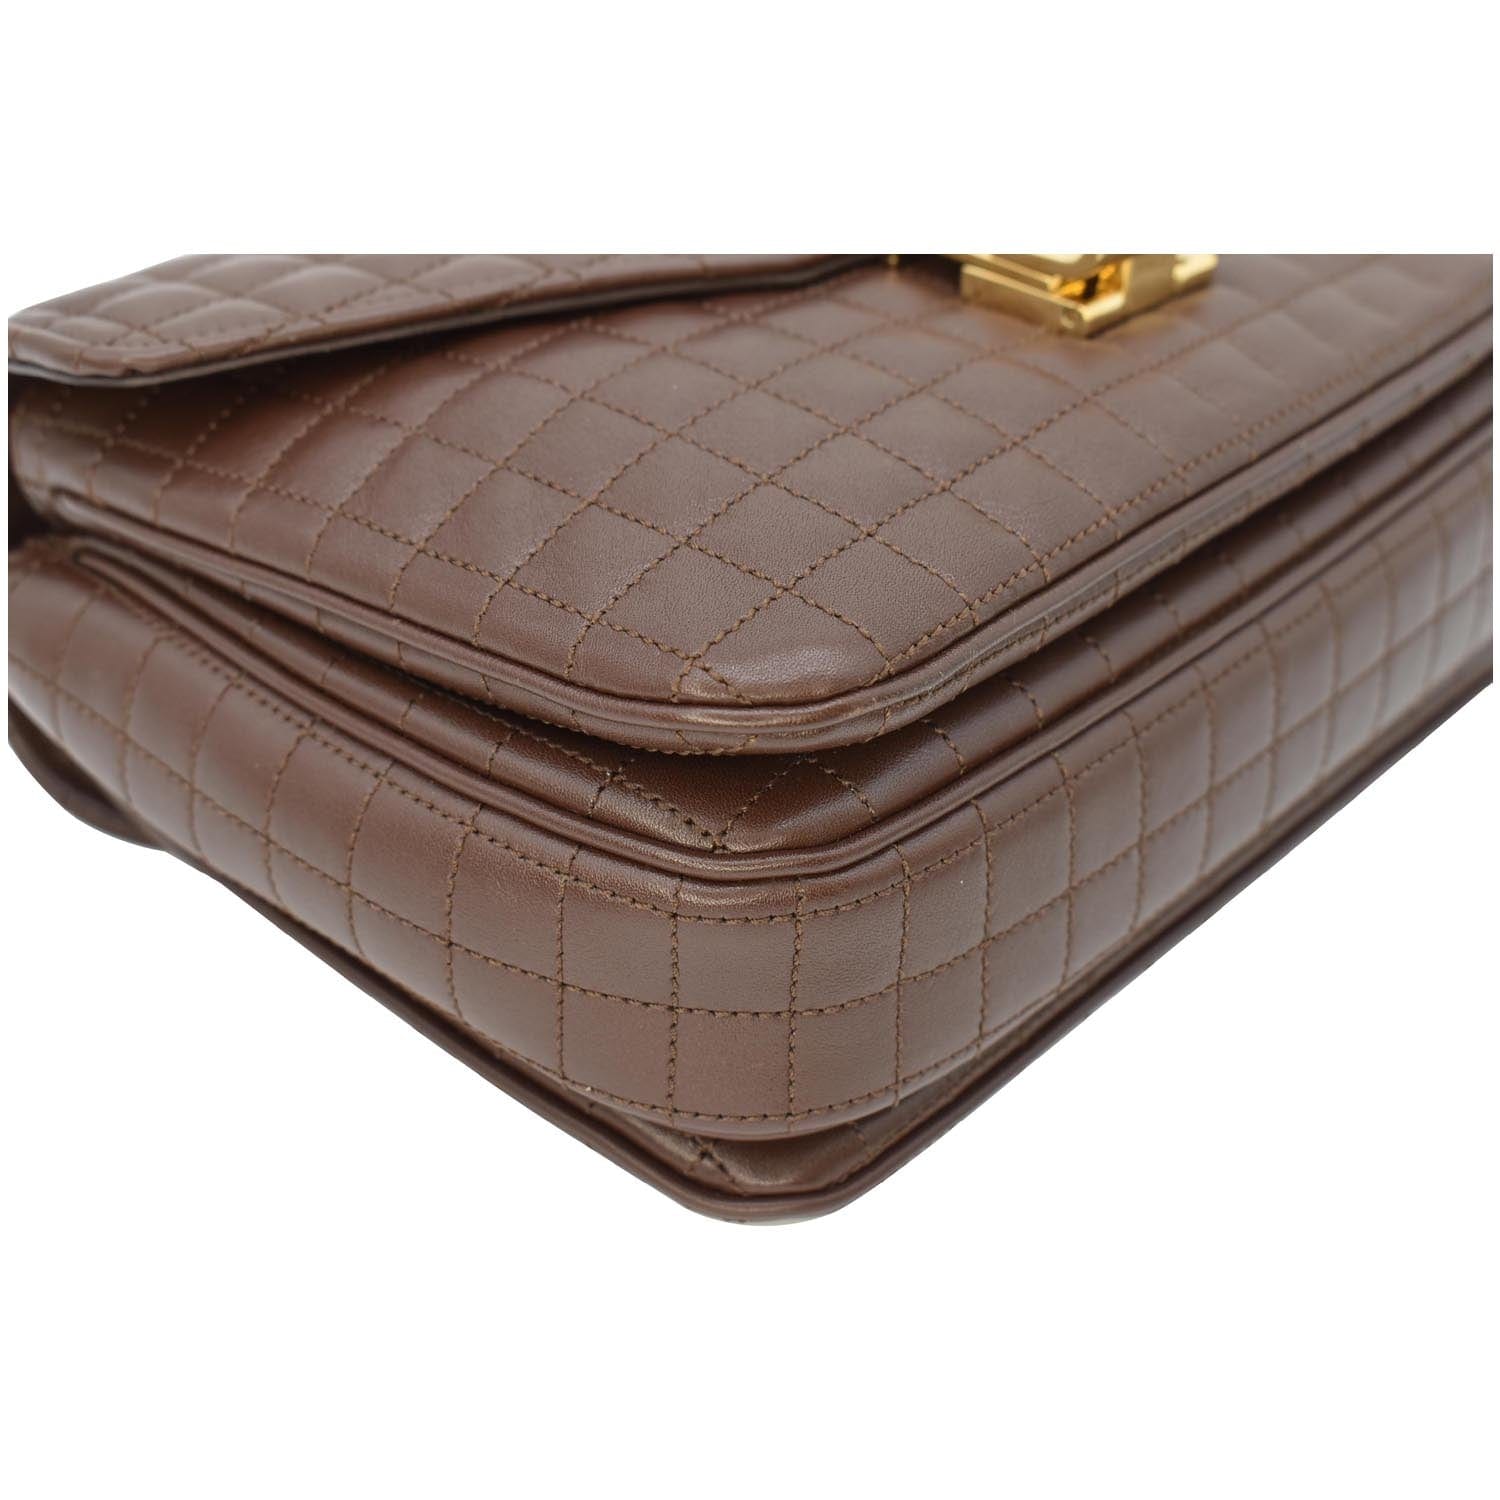 Celine Medium C Quilted Leather Crossbody Bag